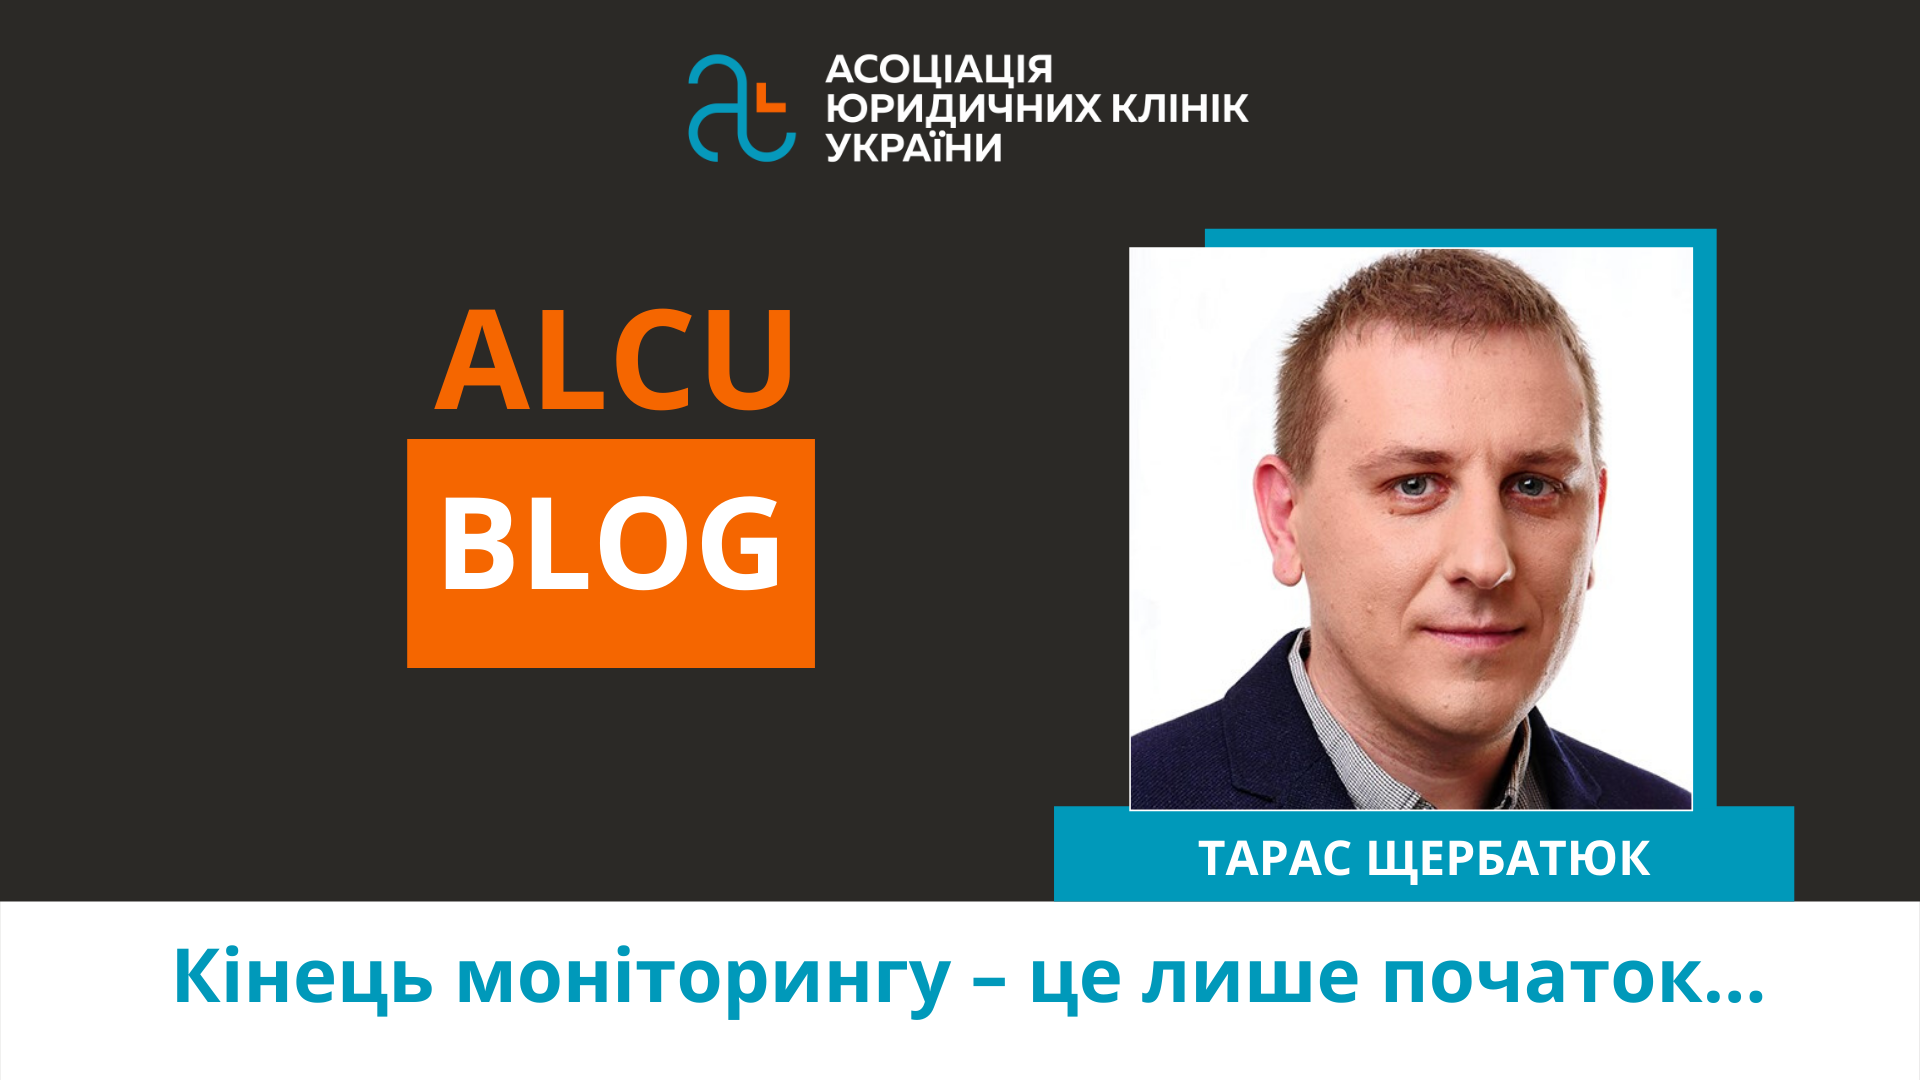 Тарас Щербатюк: кінець моніторингу – це лише початок…